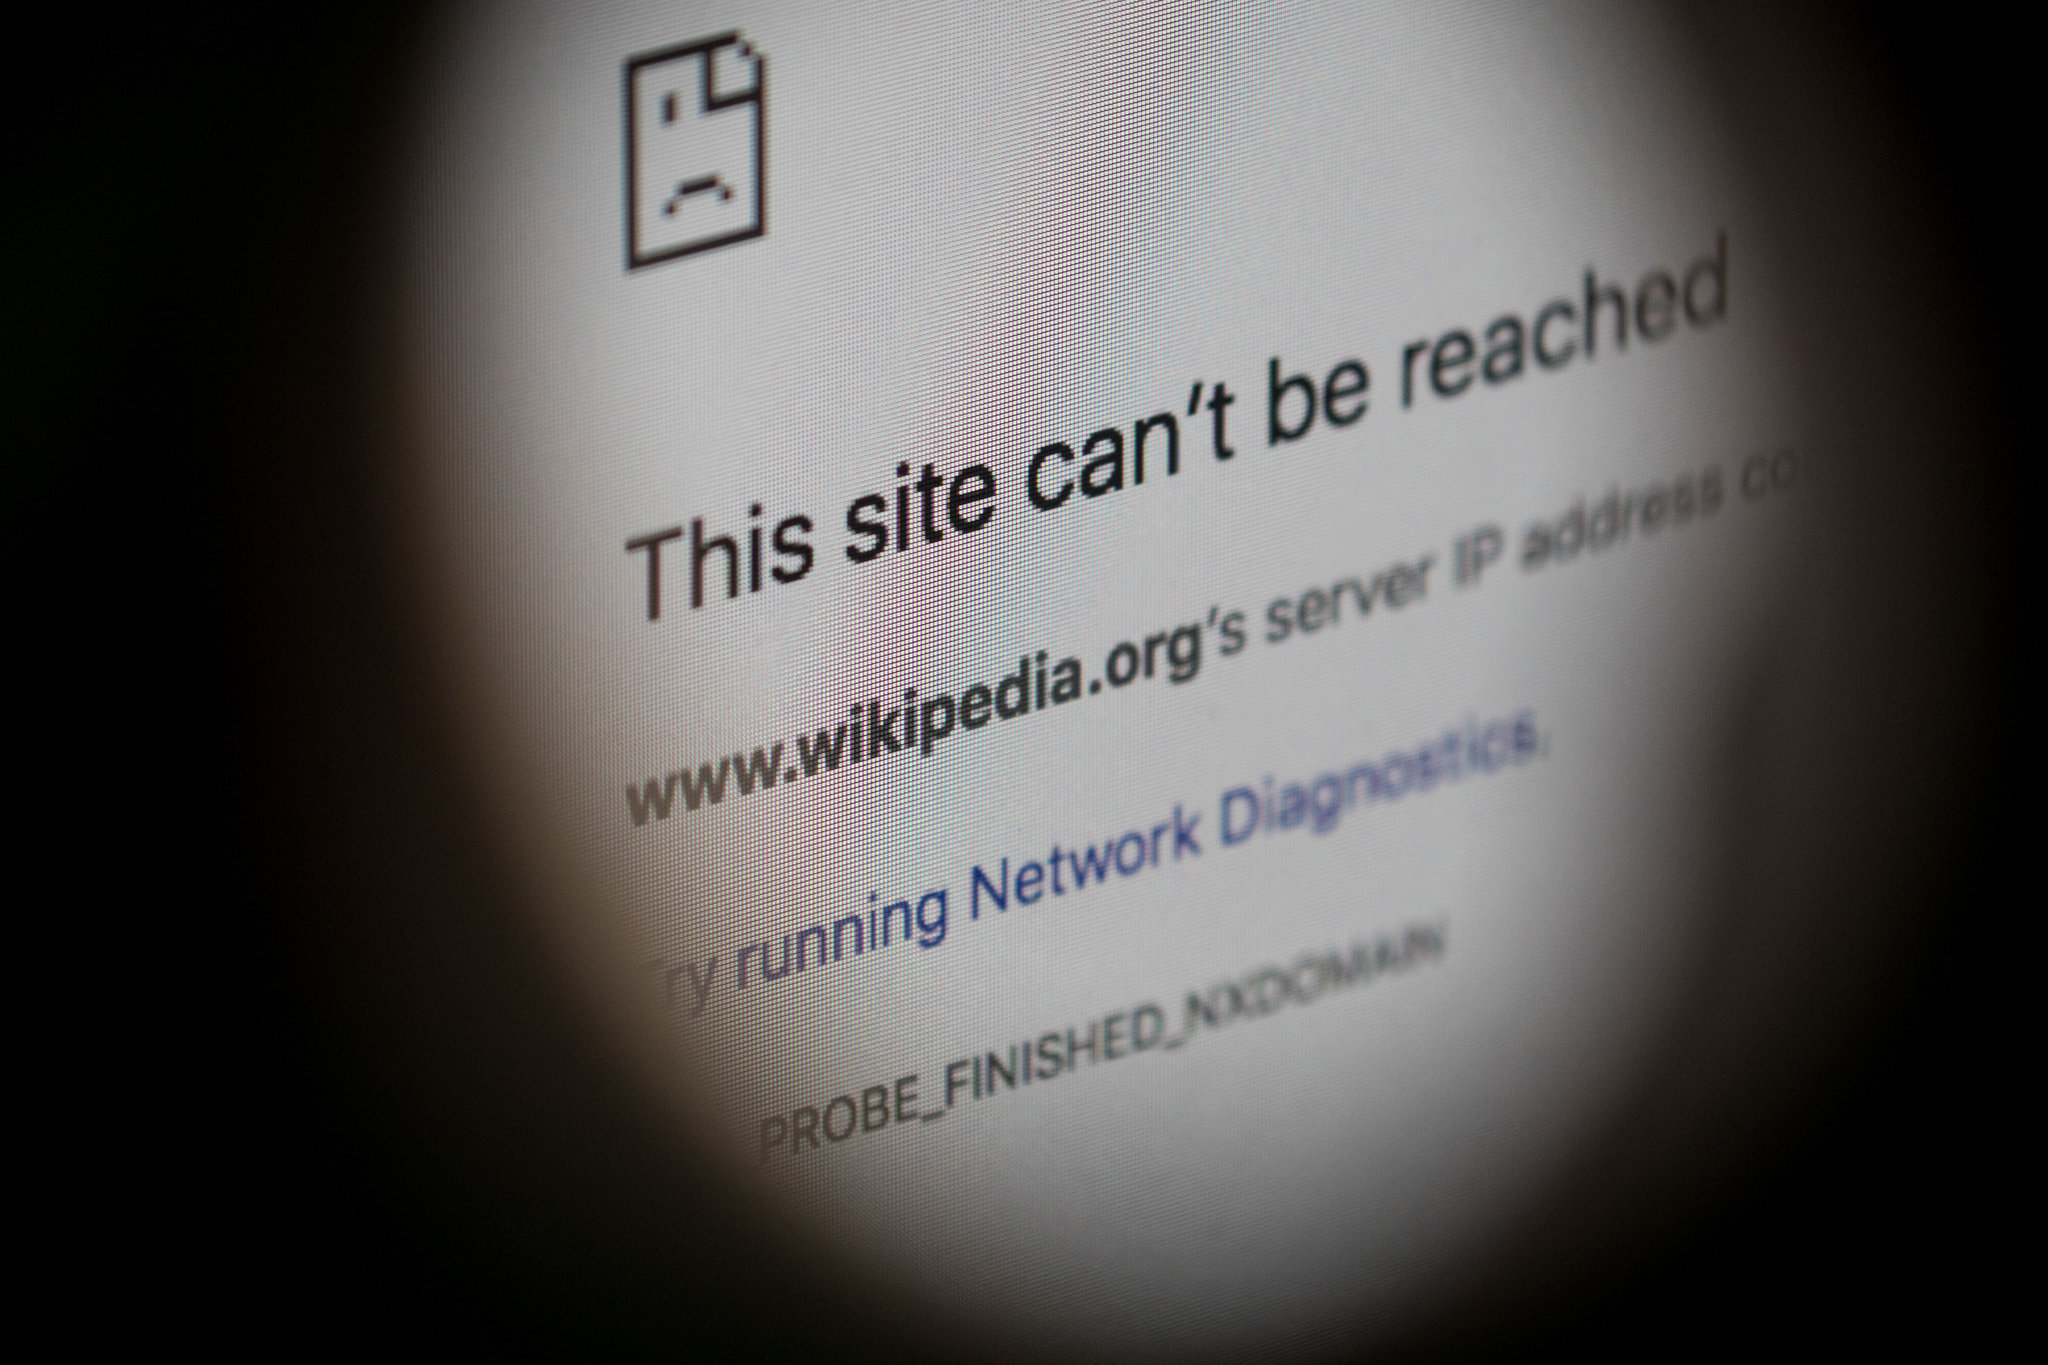 Turkey’s pro-gov’t media still trying to get Wikipedia banned